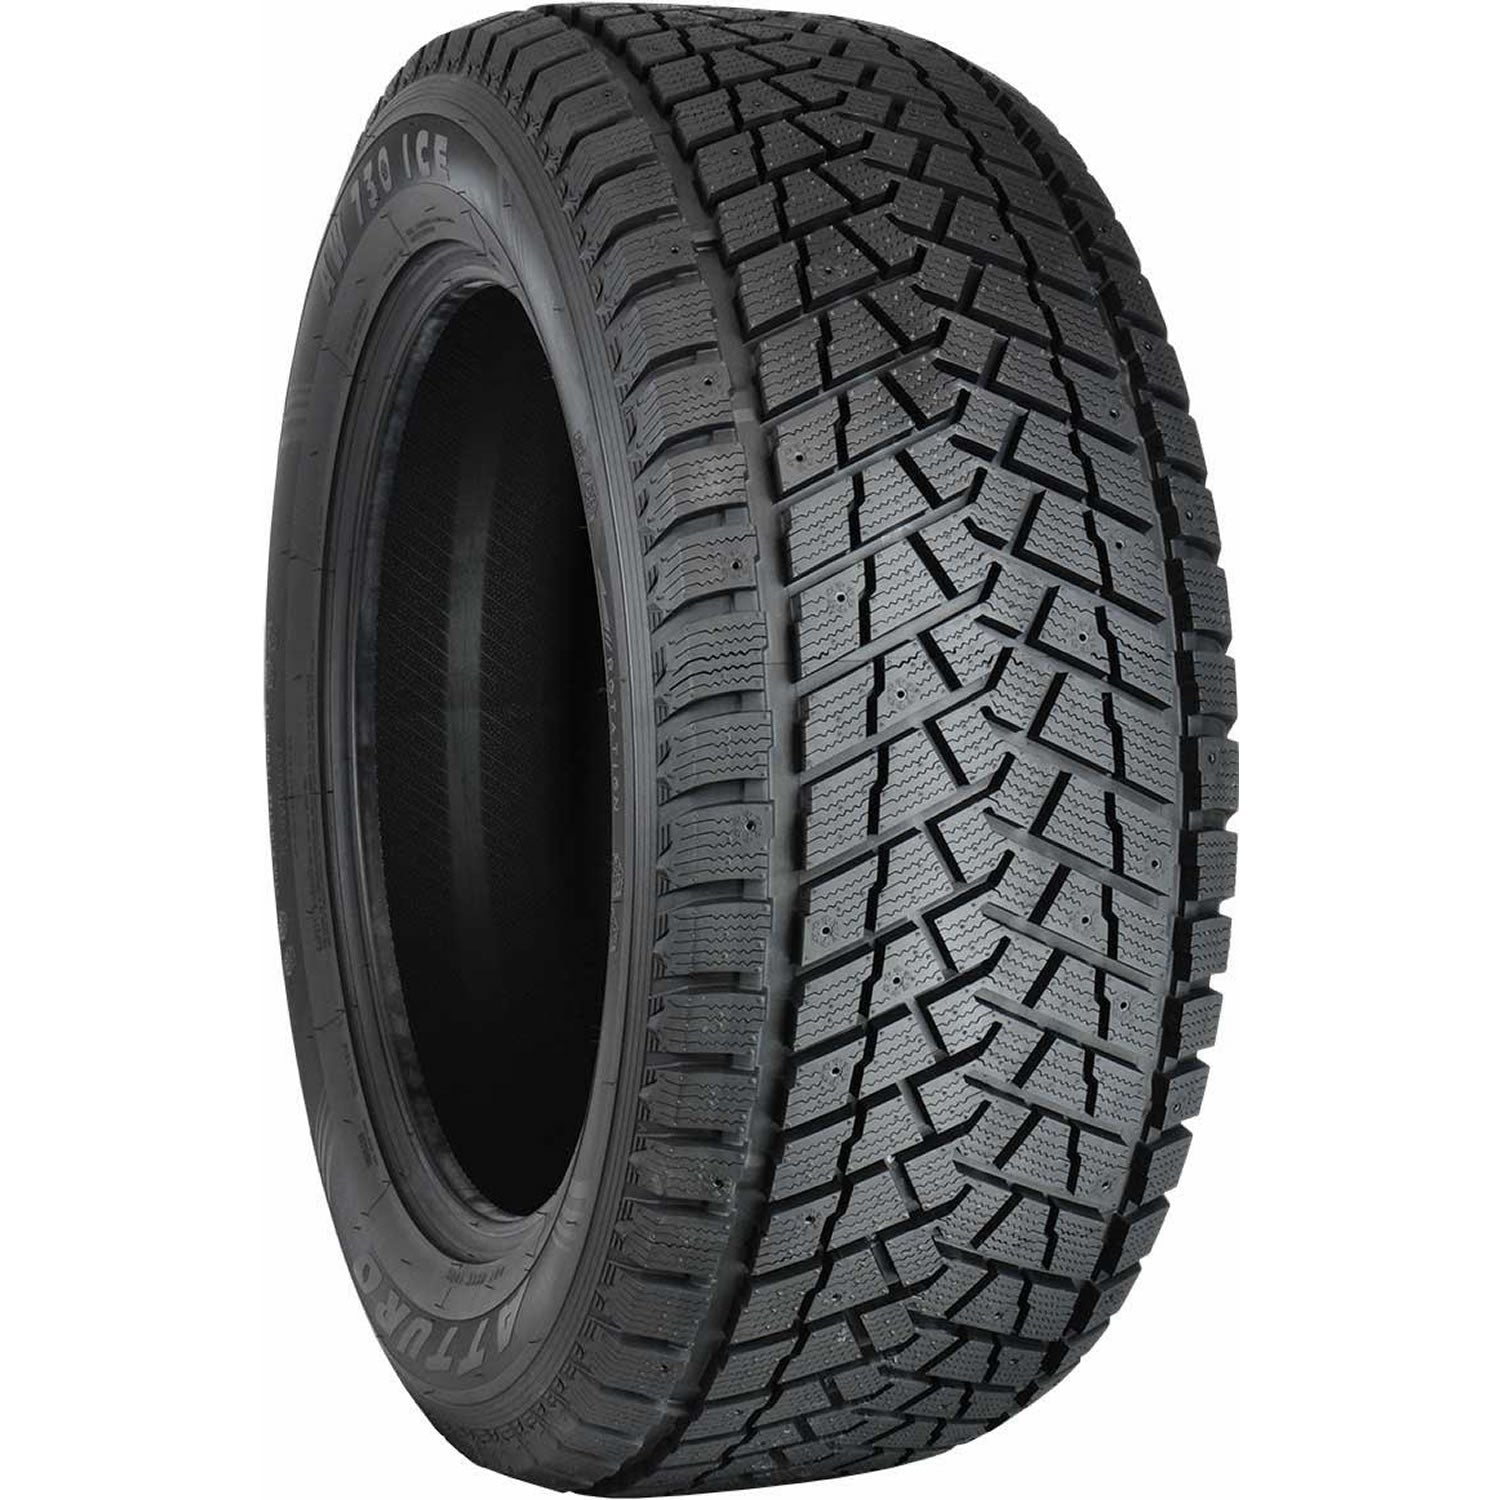 ATTURO AW730 ICE 225/65R17 (28.5X8.9R 17) Tires